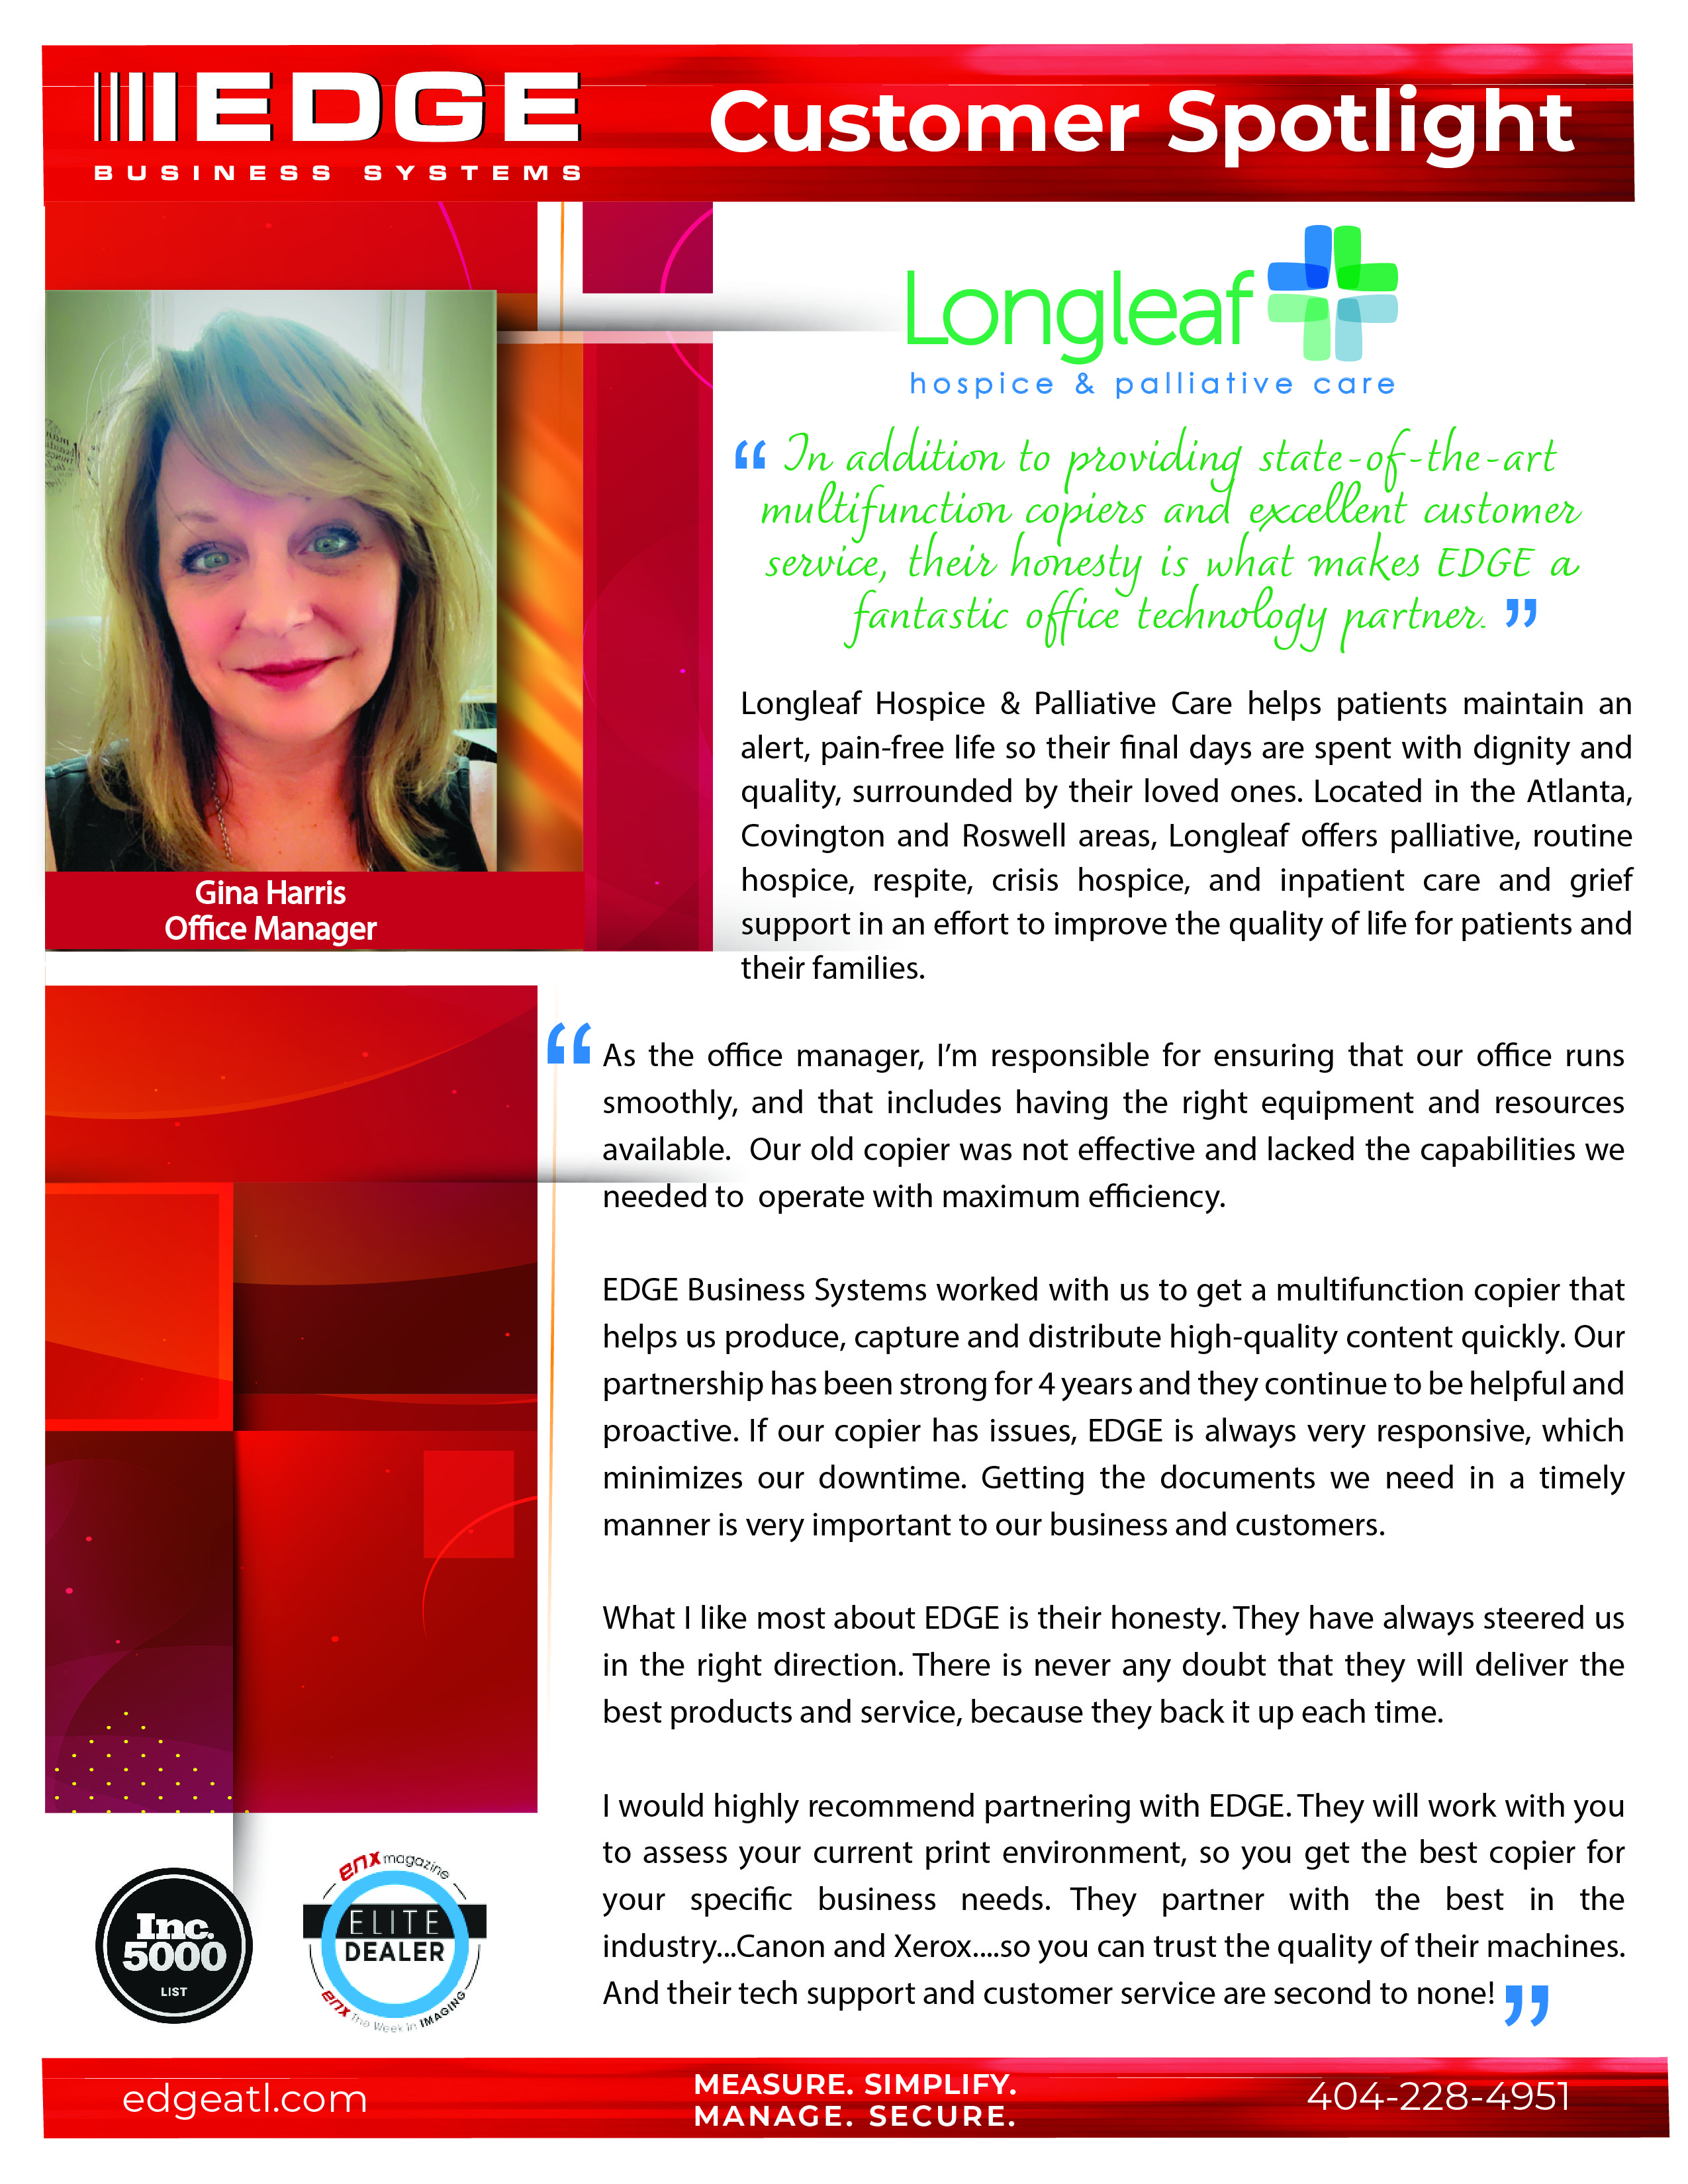 Customer Testimonial--Longleaf Hospice & Palliative Care